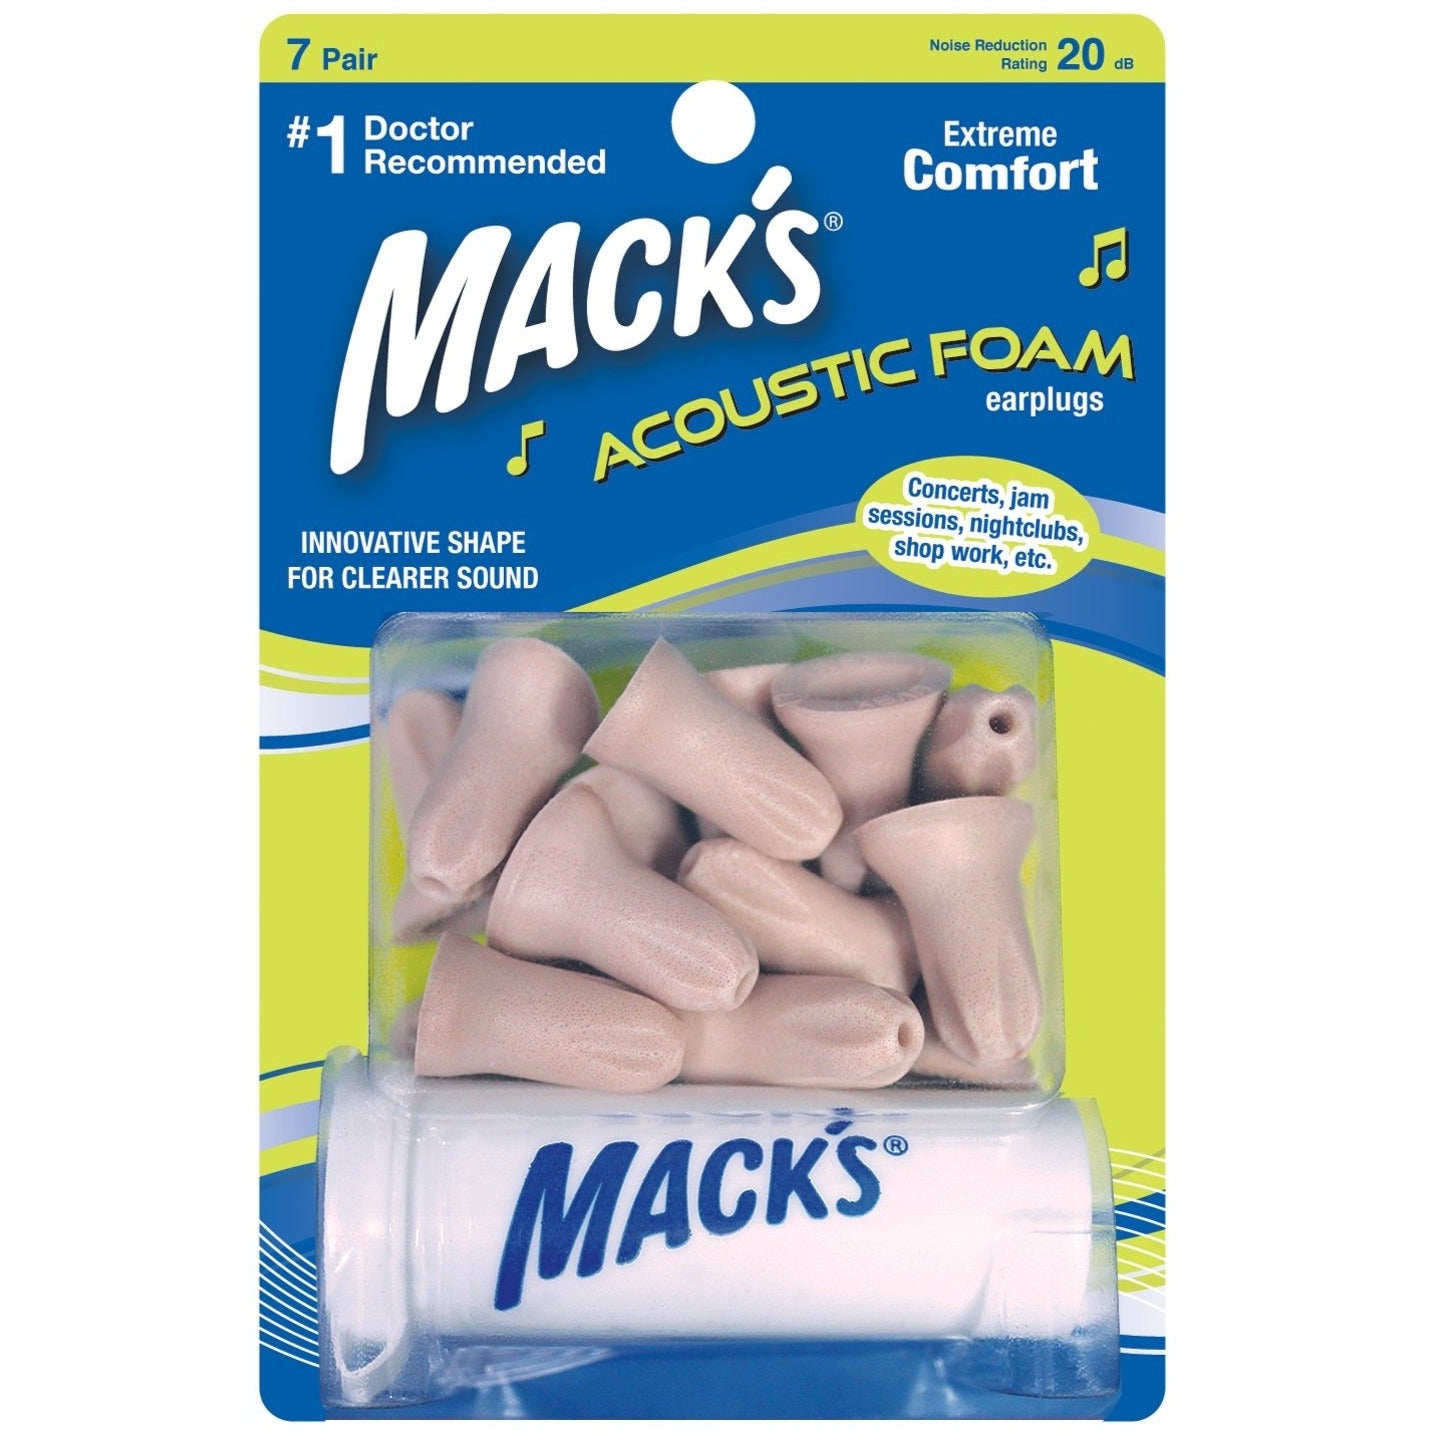 Mack's MACKS-967 Acoustic Foam - 7 Pair with Case, -20db